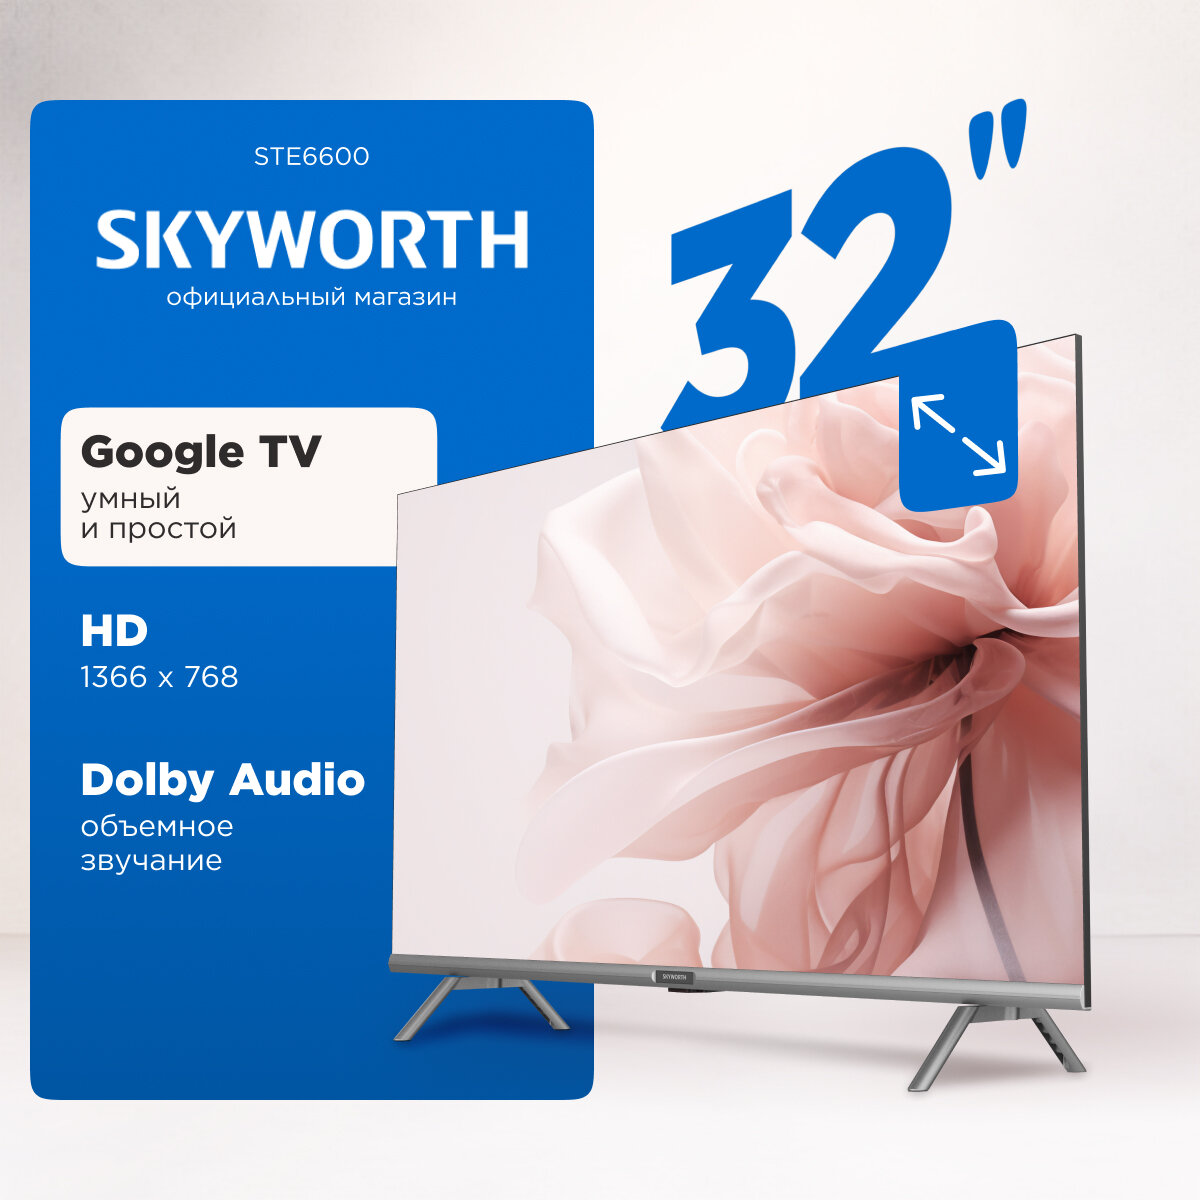 Телевизор Skyworth LED 32" HD, 32STE6600 с Google Tv, Bluetooth, Wifi, Dolby Audio и поддержкой голосовых команд, серый